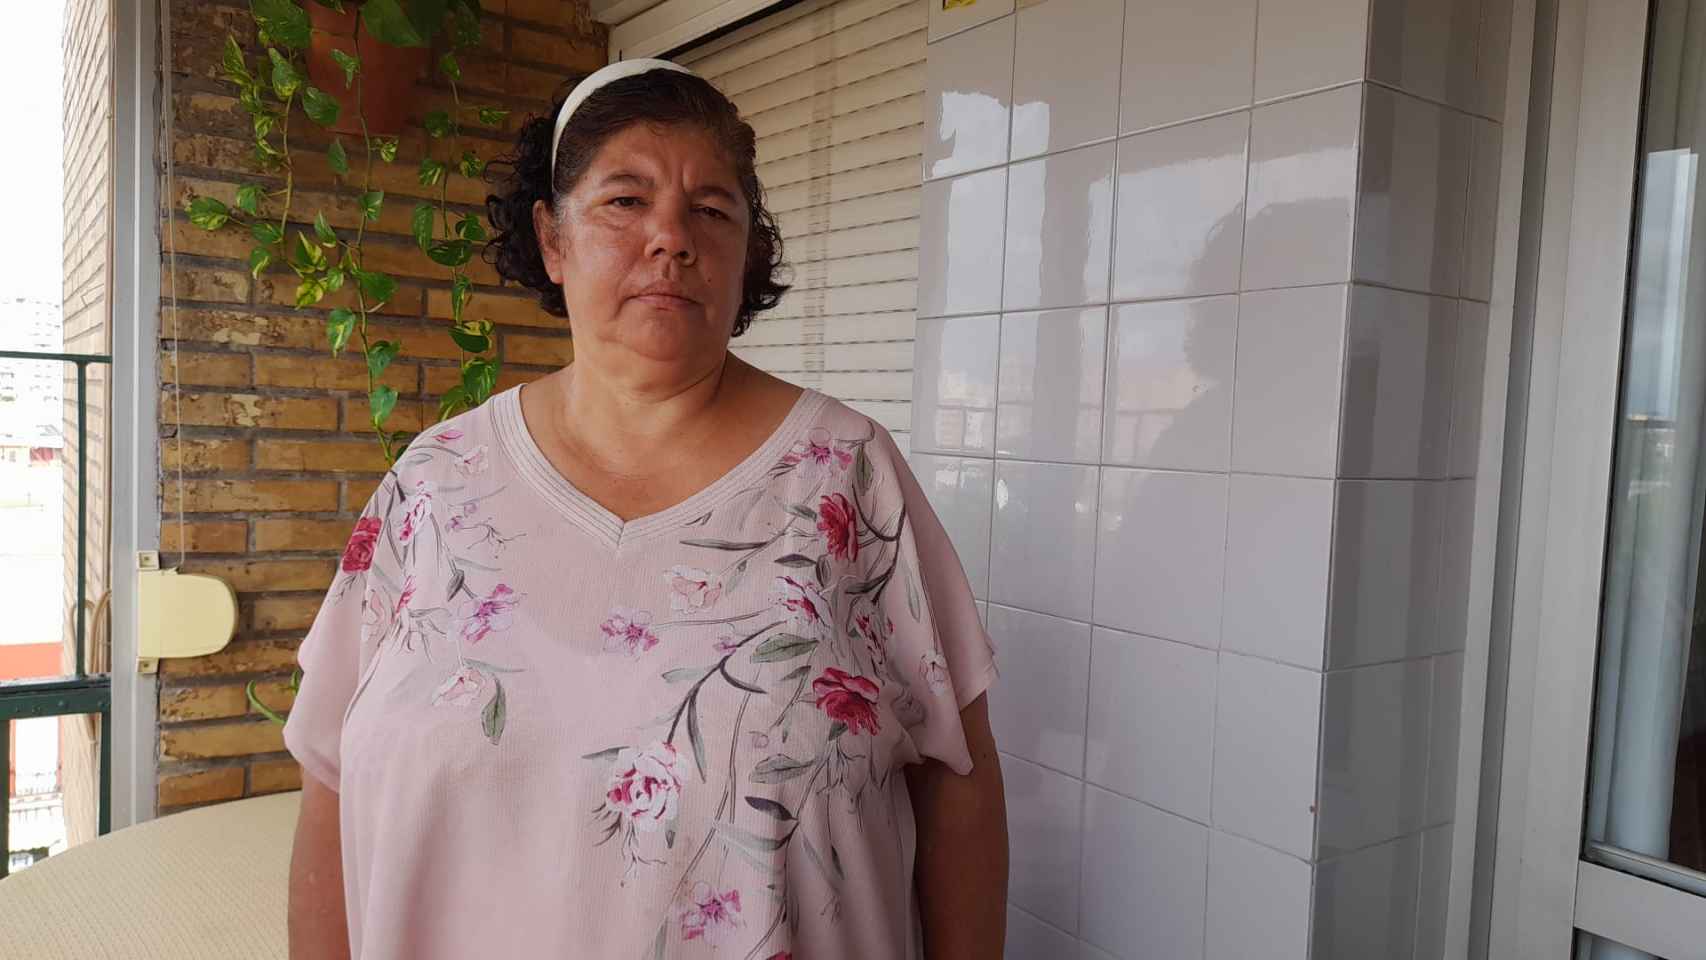 Sady Brítez, trabajadora del hogar muerta según la Seguridad Social.